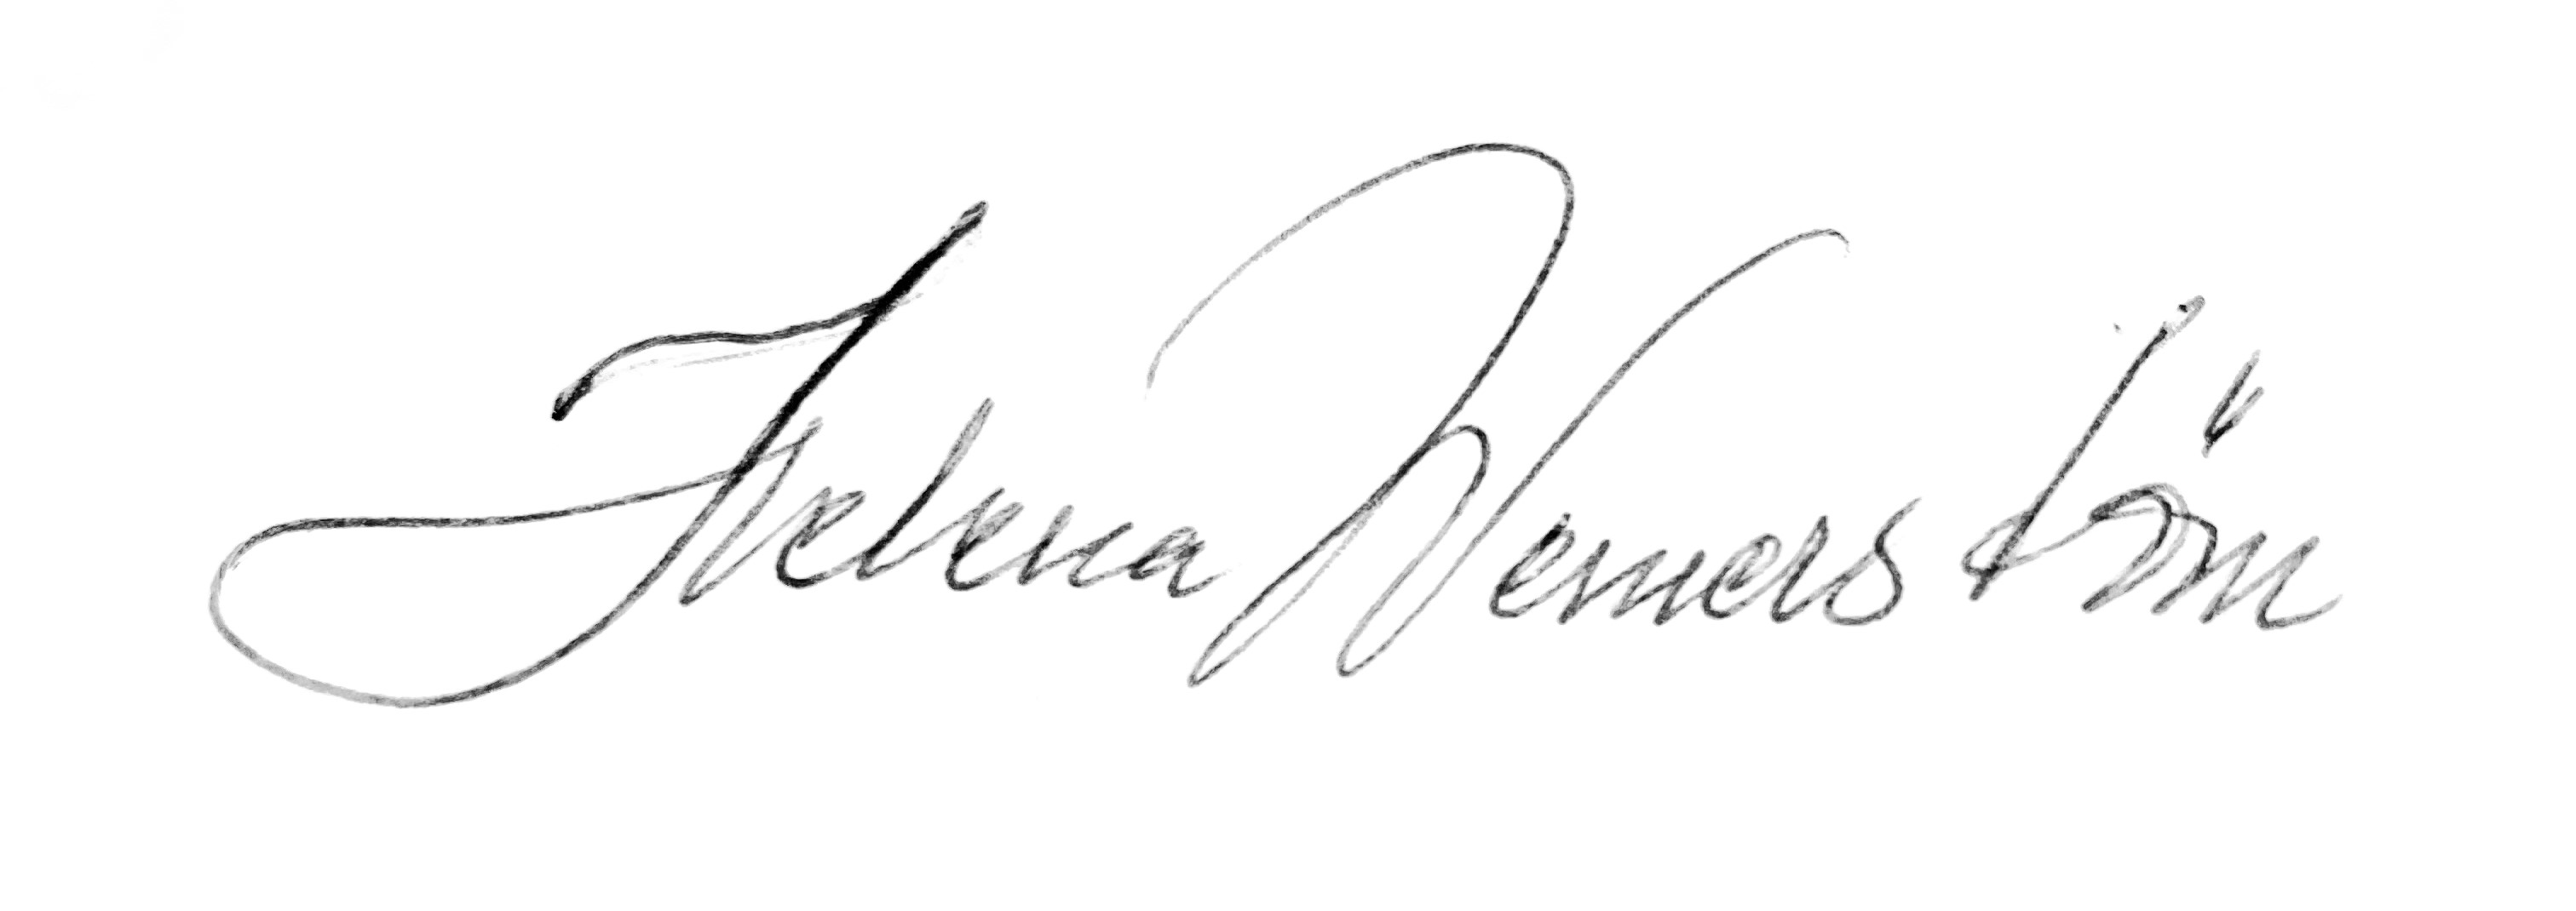 1147 Helena W signatur